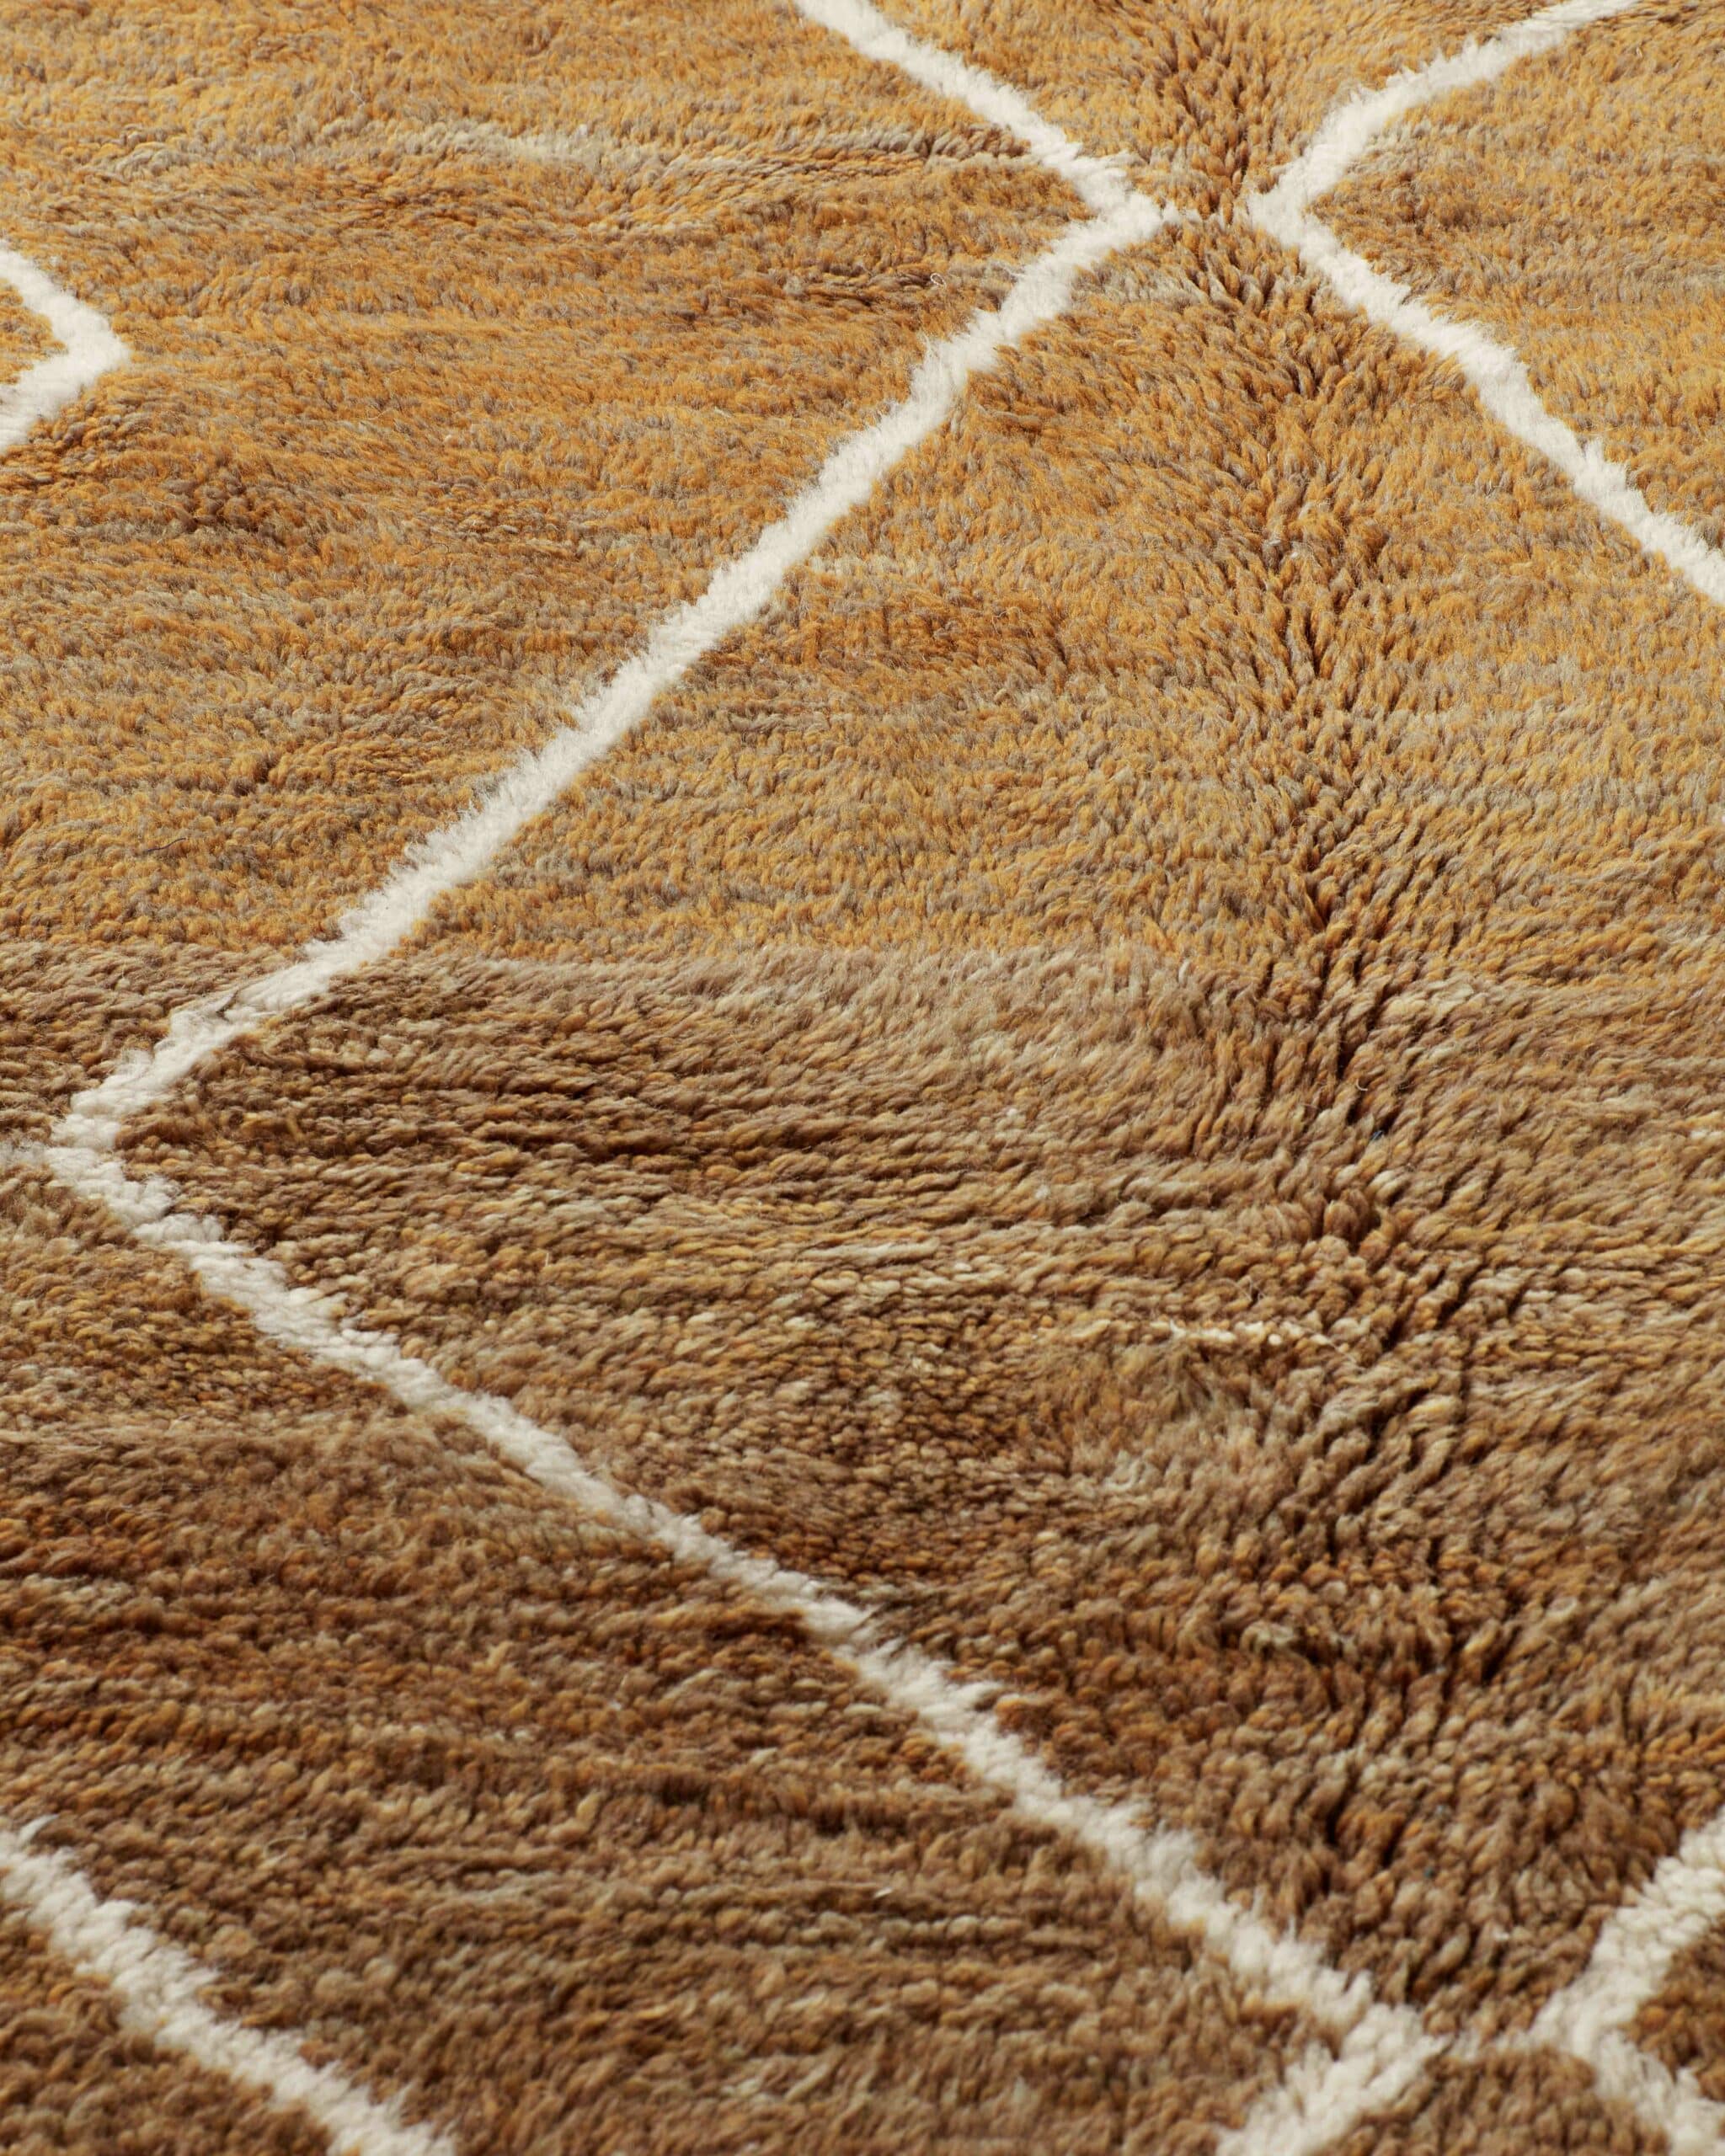 Mrirt rug in autumn tones, detail